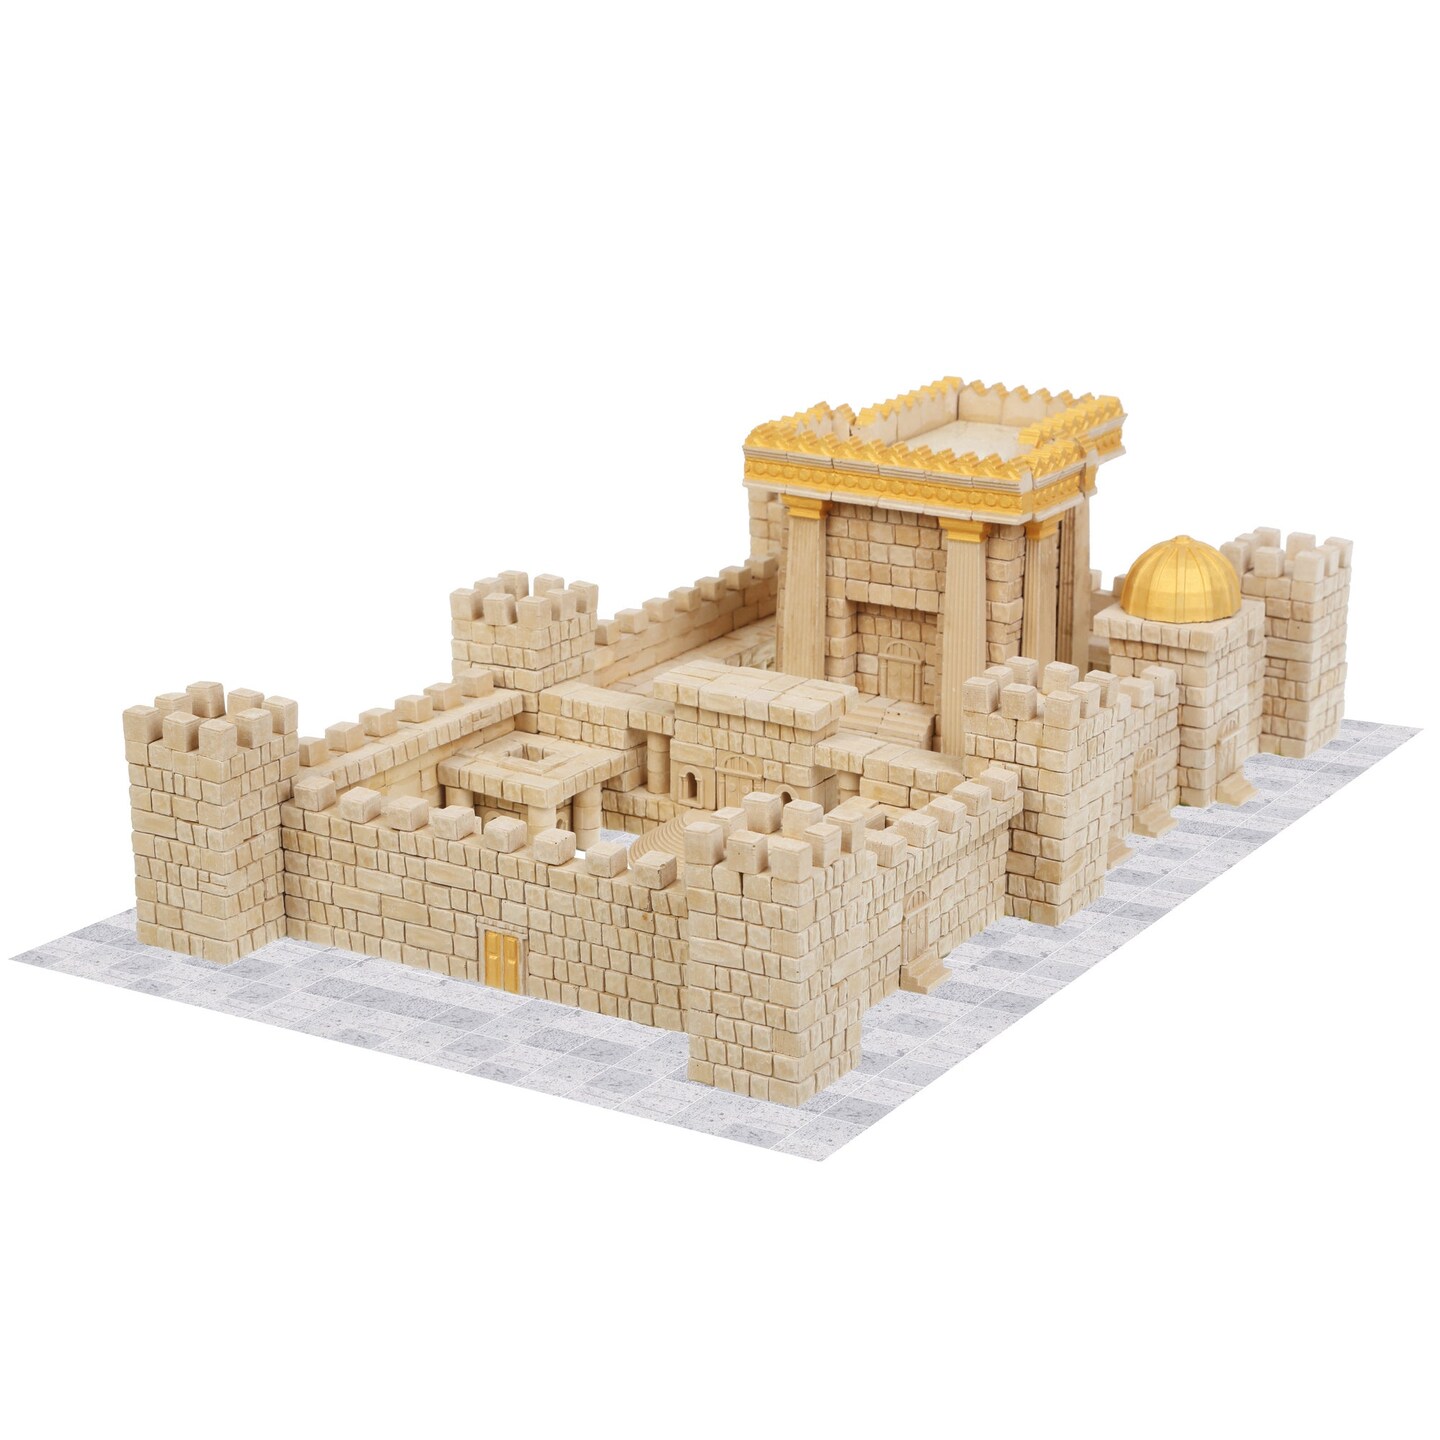 Mini Bricks Construction Set - Third Temple